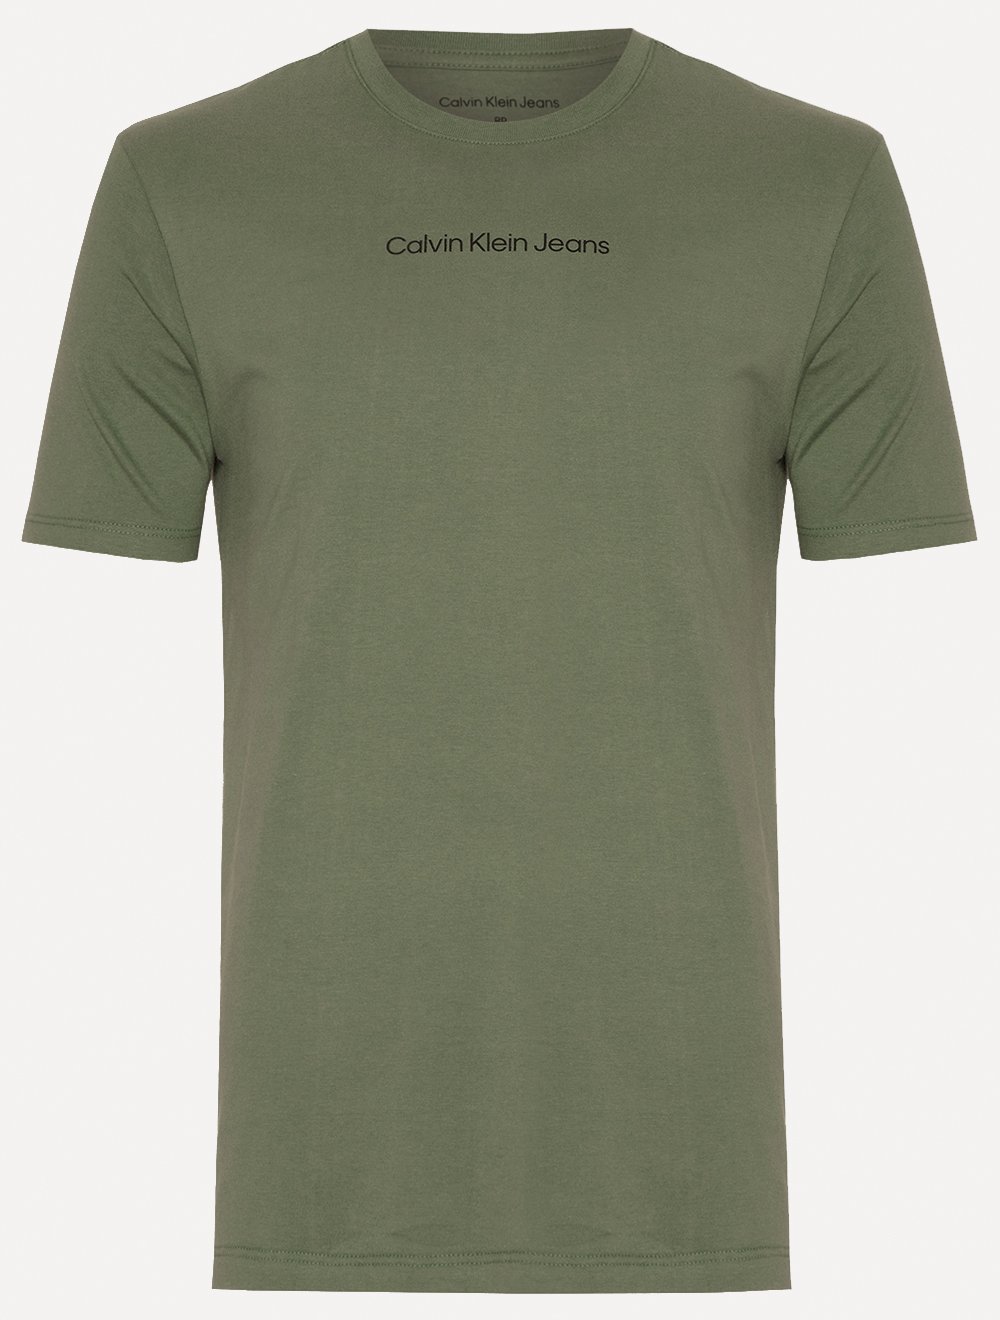 Camiseta Calvin Klein Jeans Masculina Institutional New Logo Verde Militar